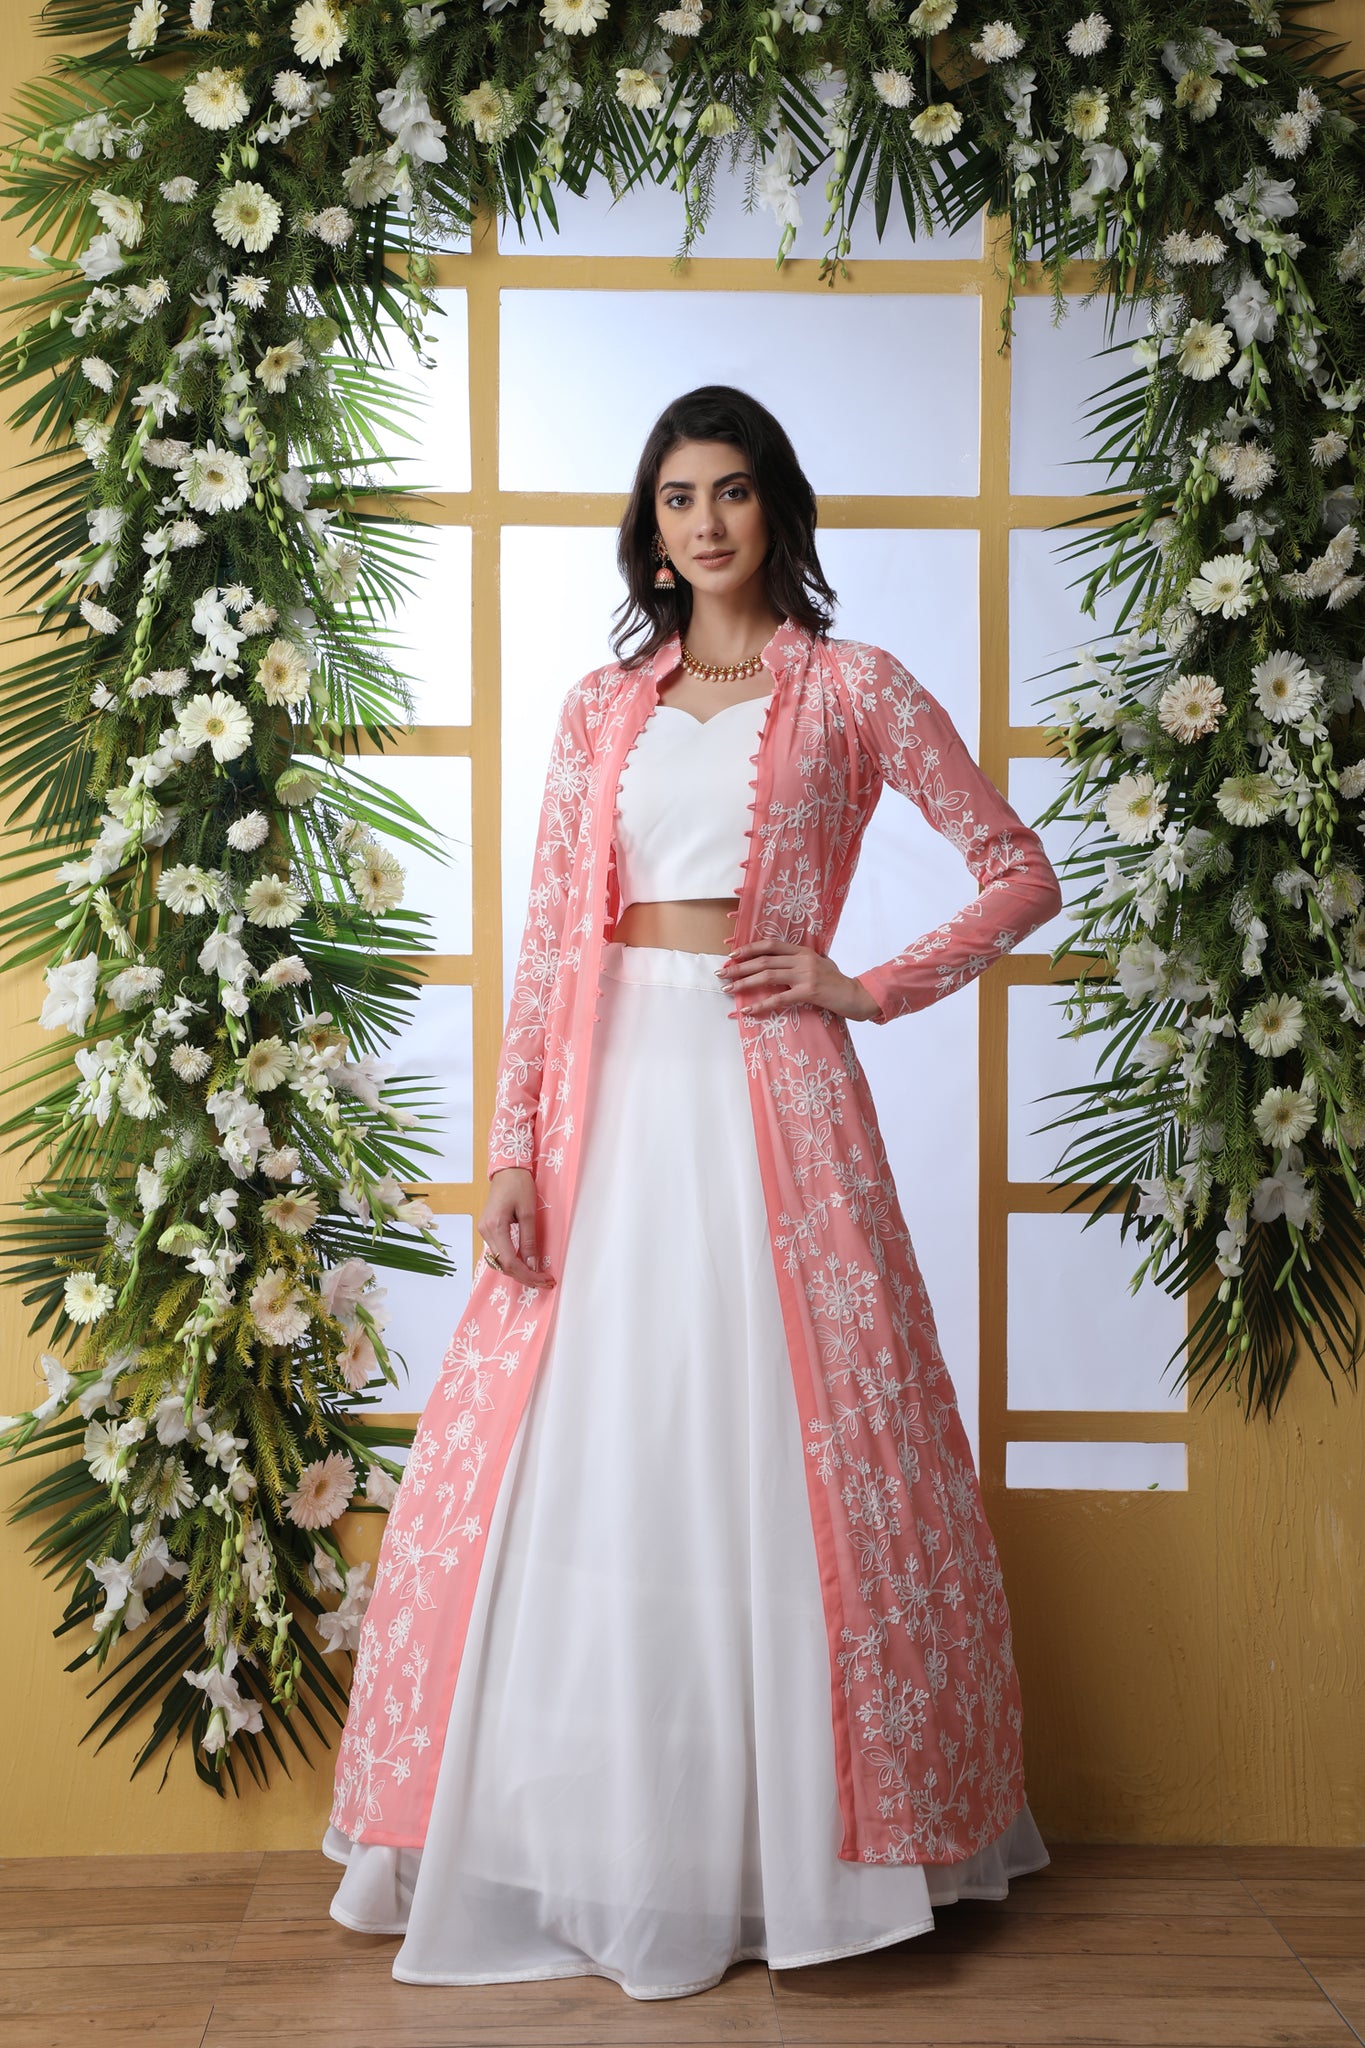 Stunning Lancha Dress Designs for Unforgettable Weddings